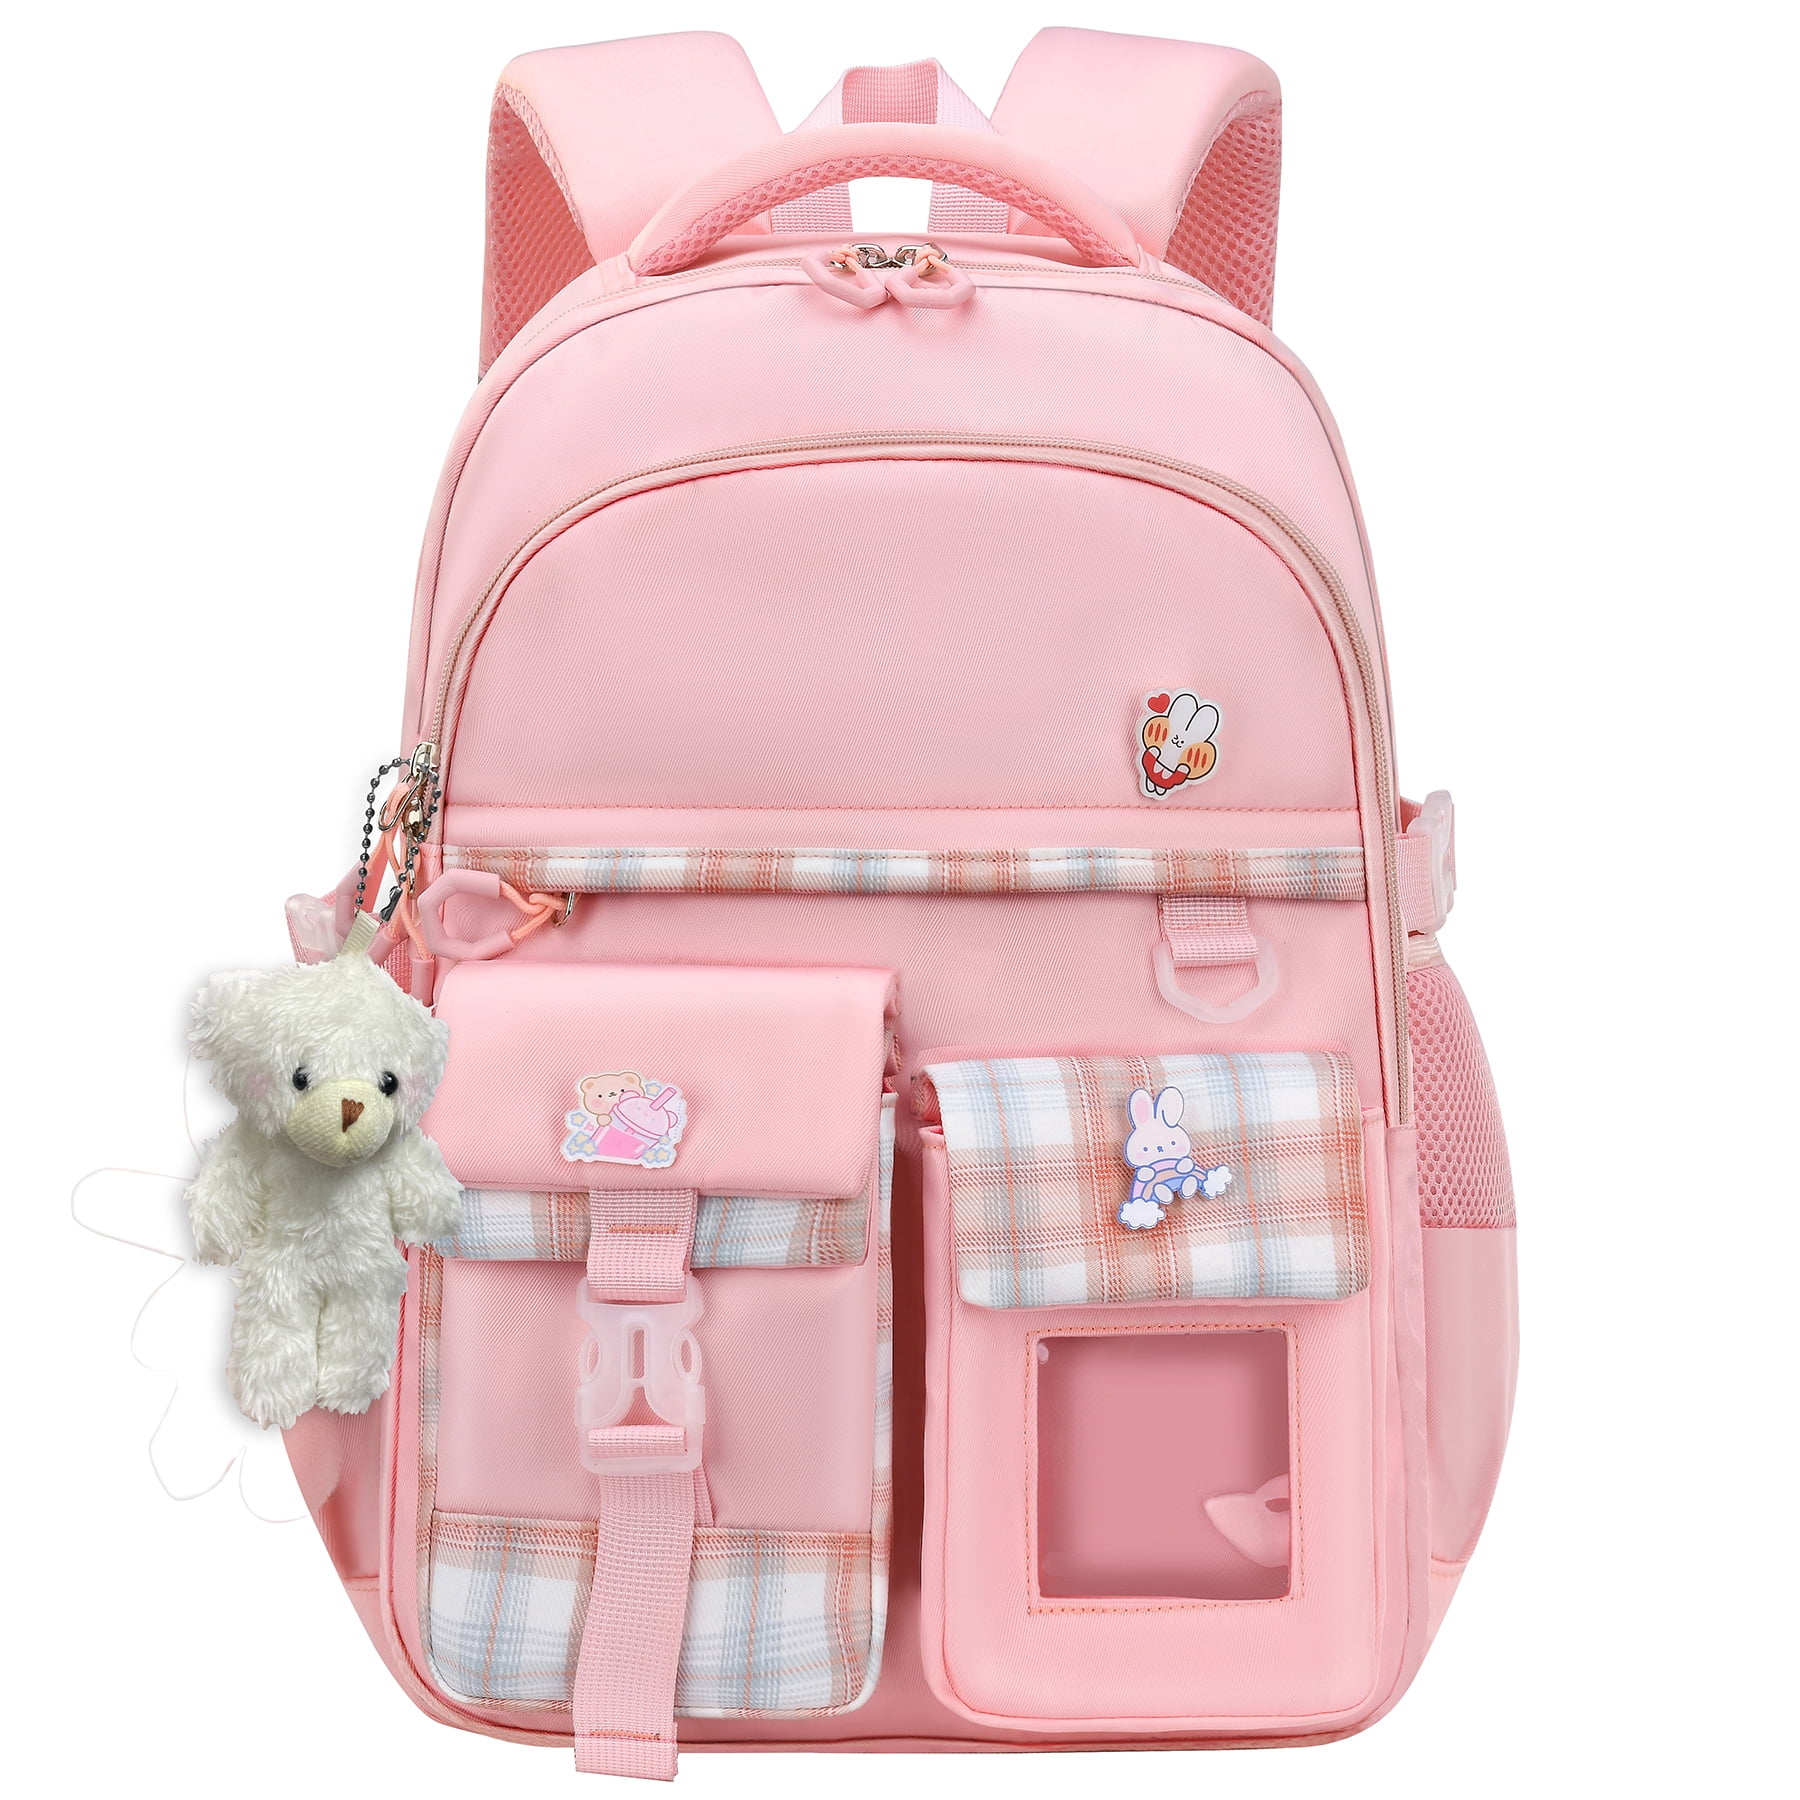 Derstuewe Cute Pink School Backpack for Teens and Students, Pink Color ...